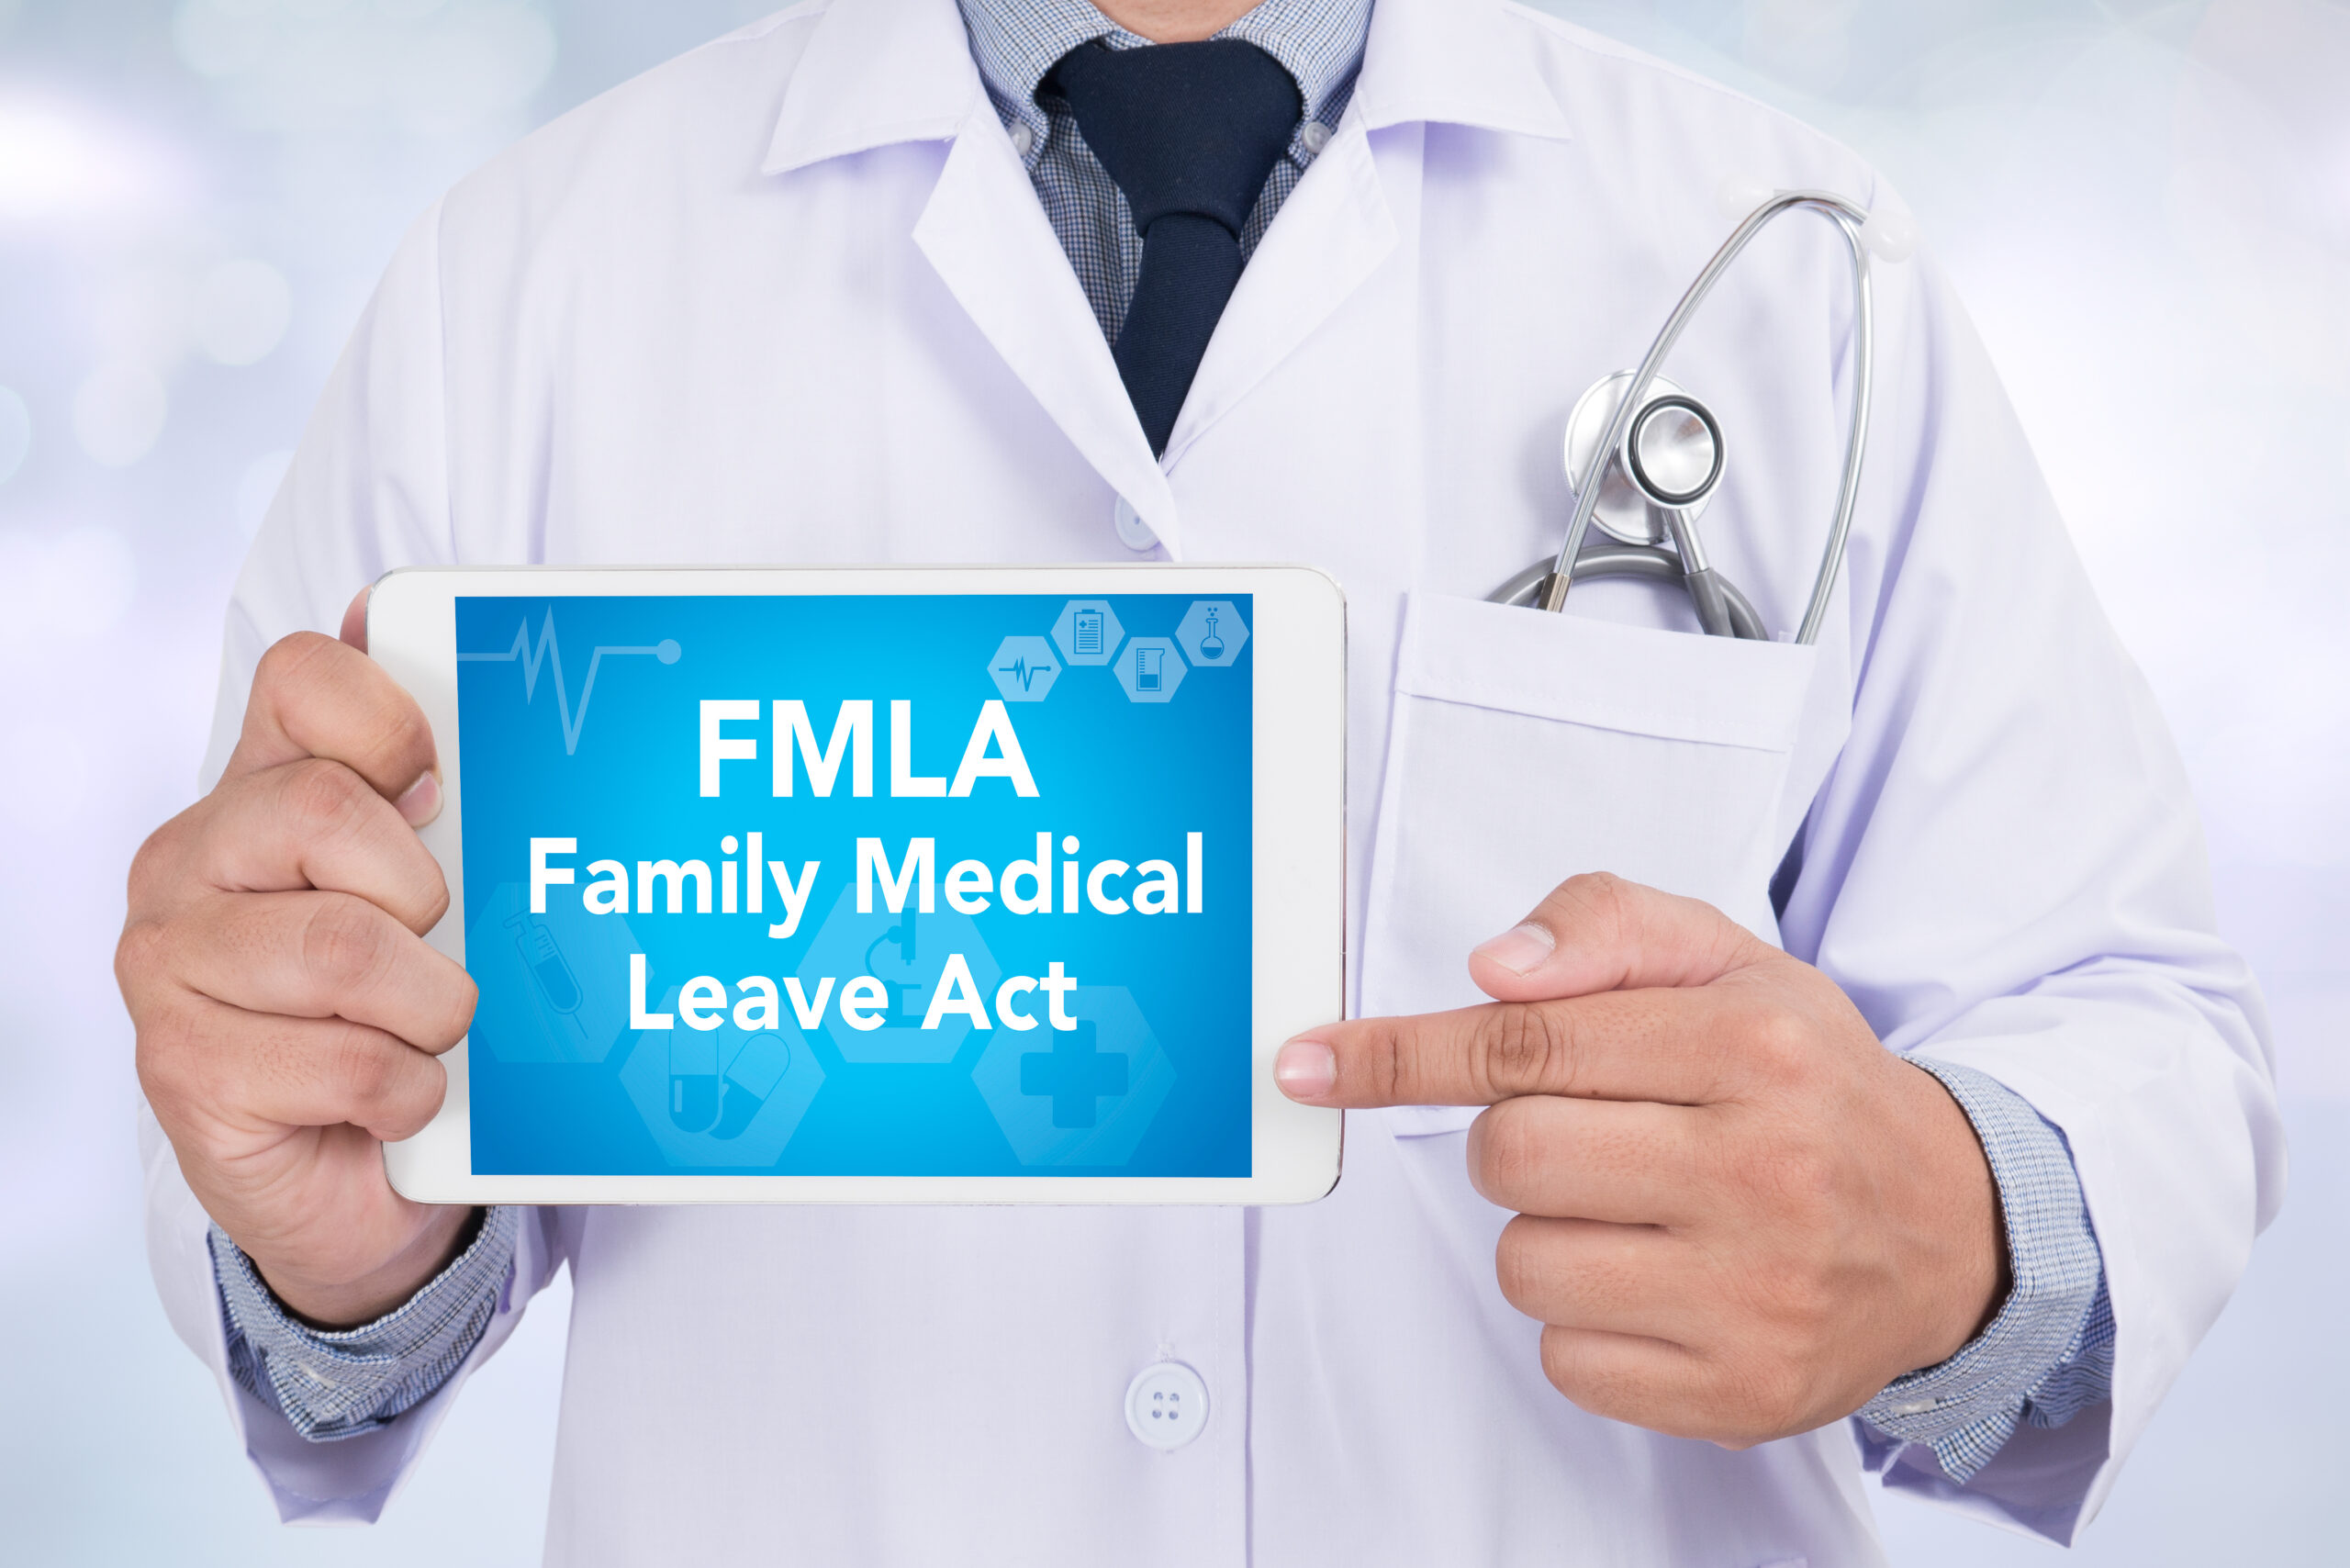 Fmla,Family,Medical,Leave,Act,,fmla